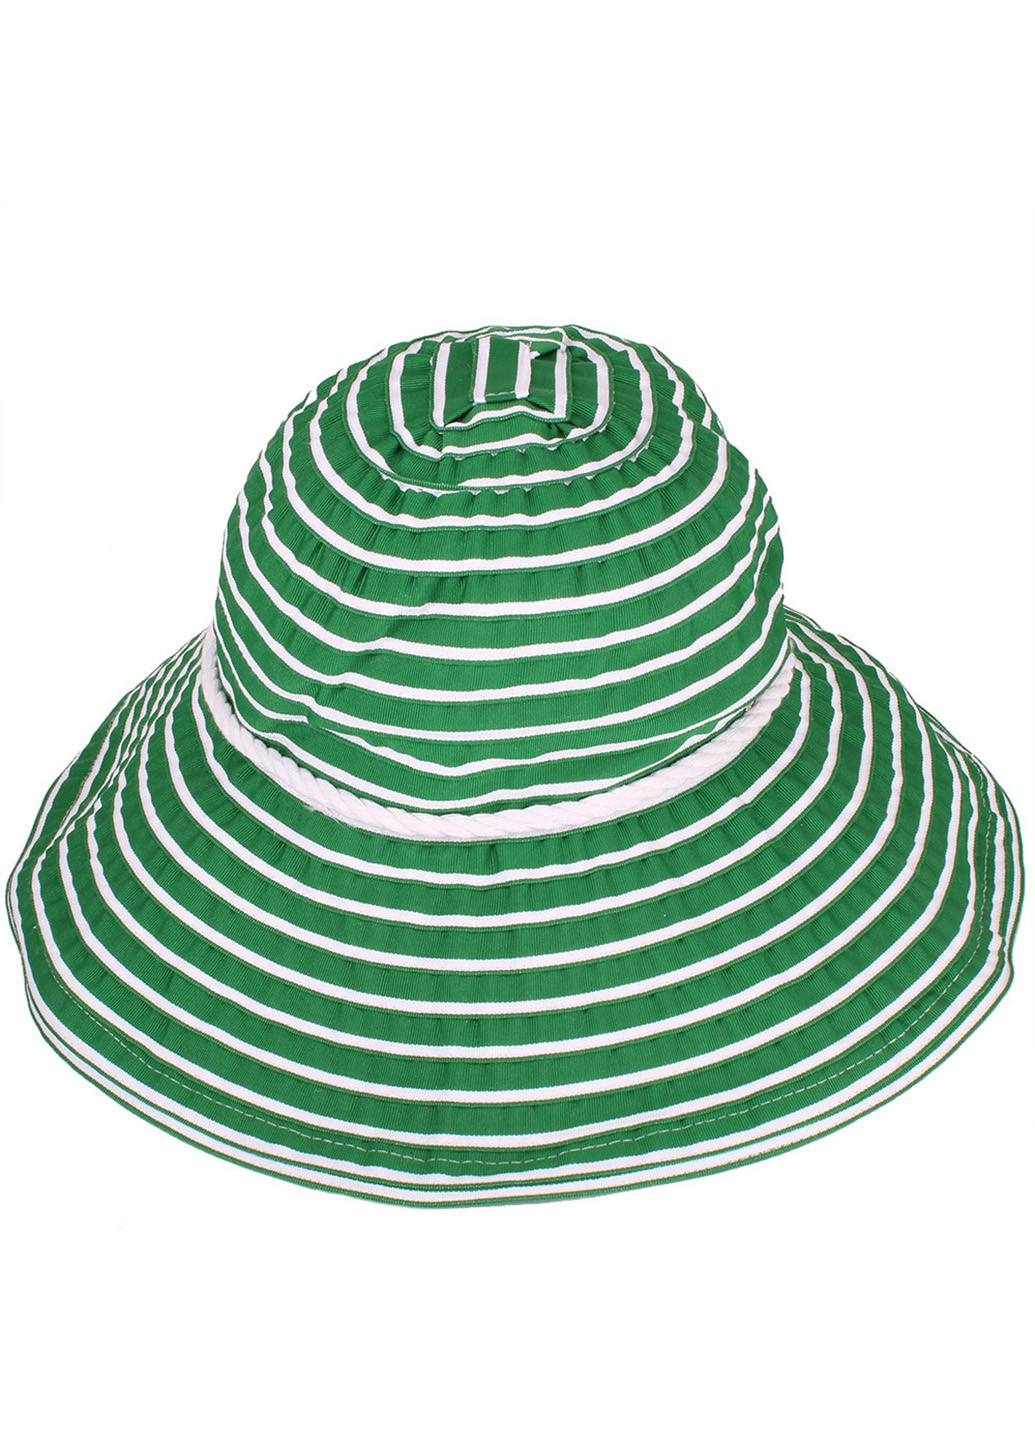 Жіноча капелюх 56-57 см Del Mare (212680313)